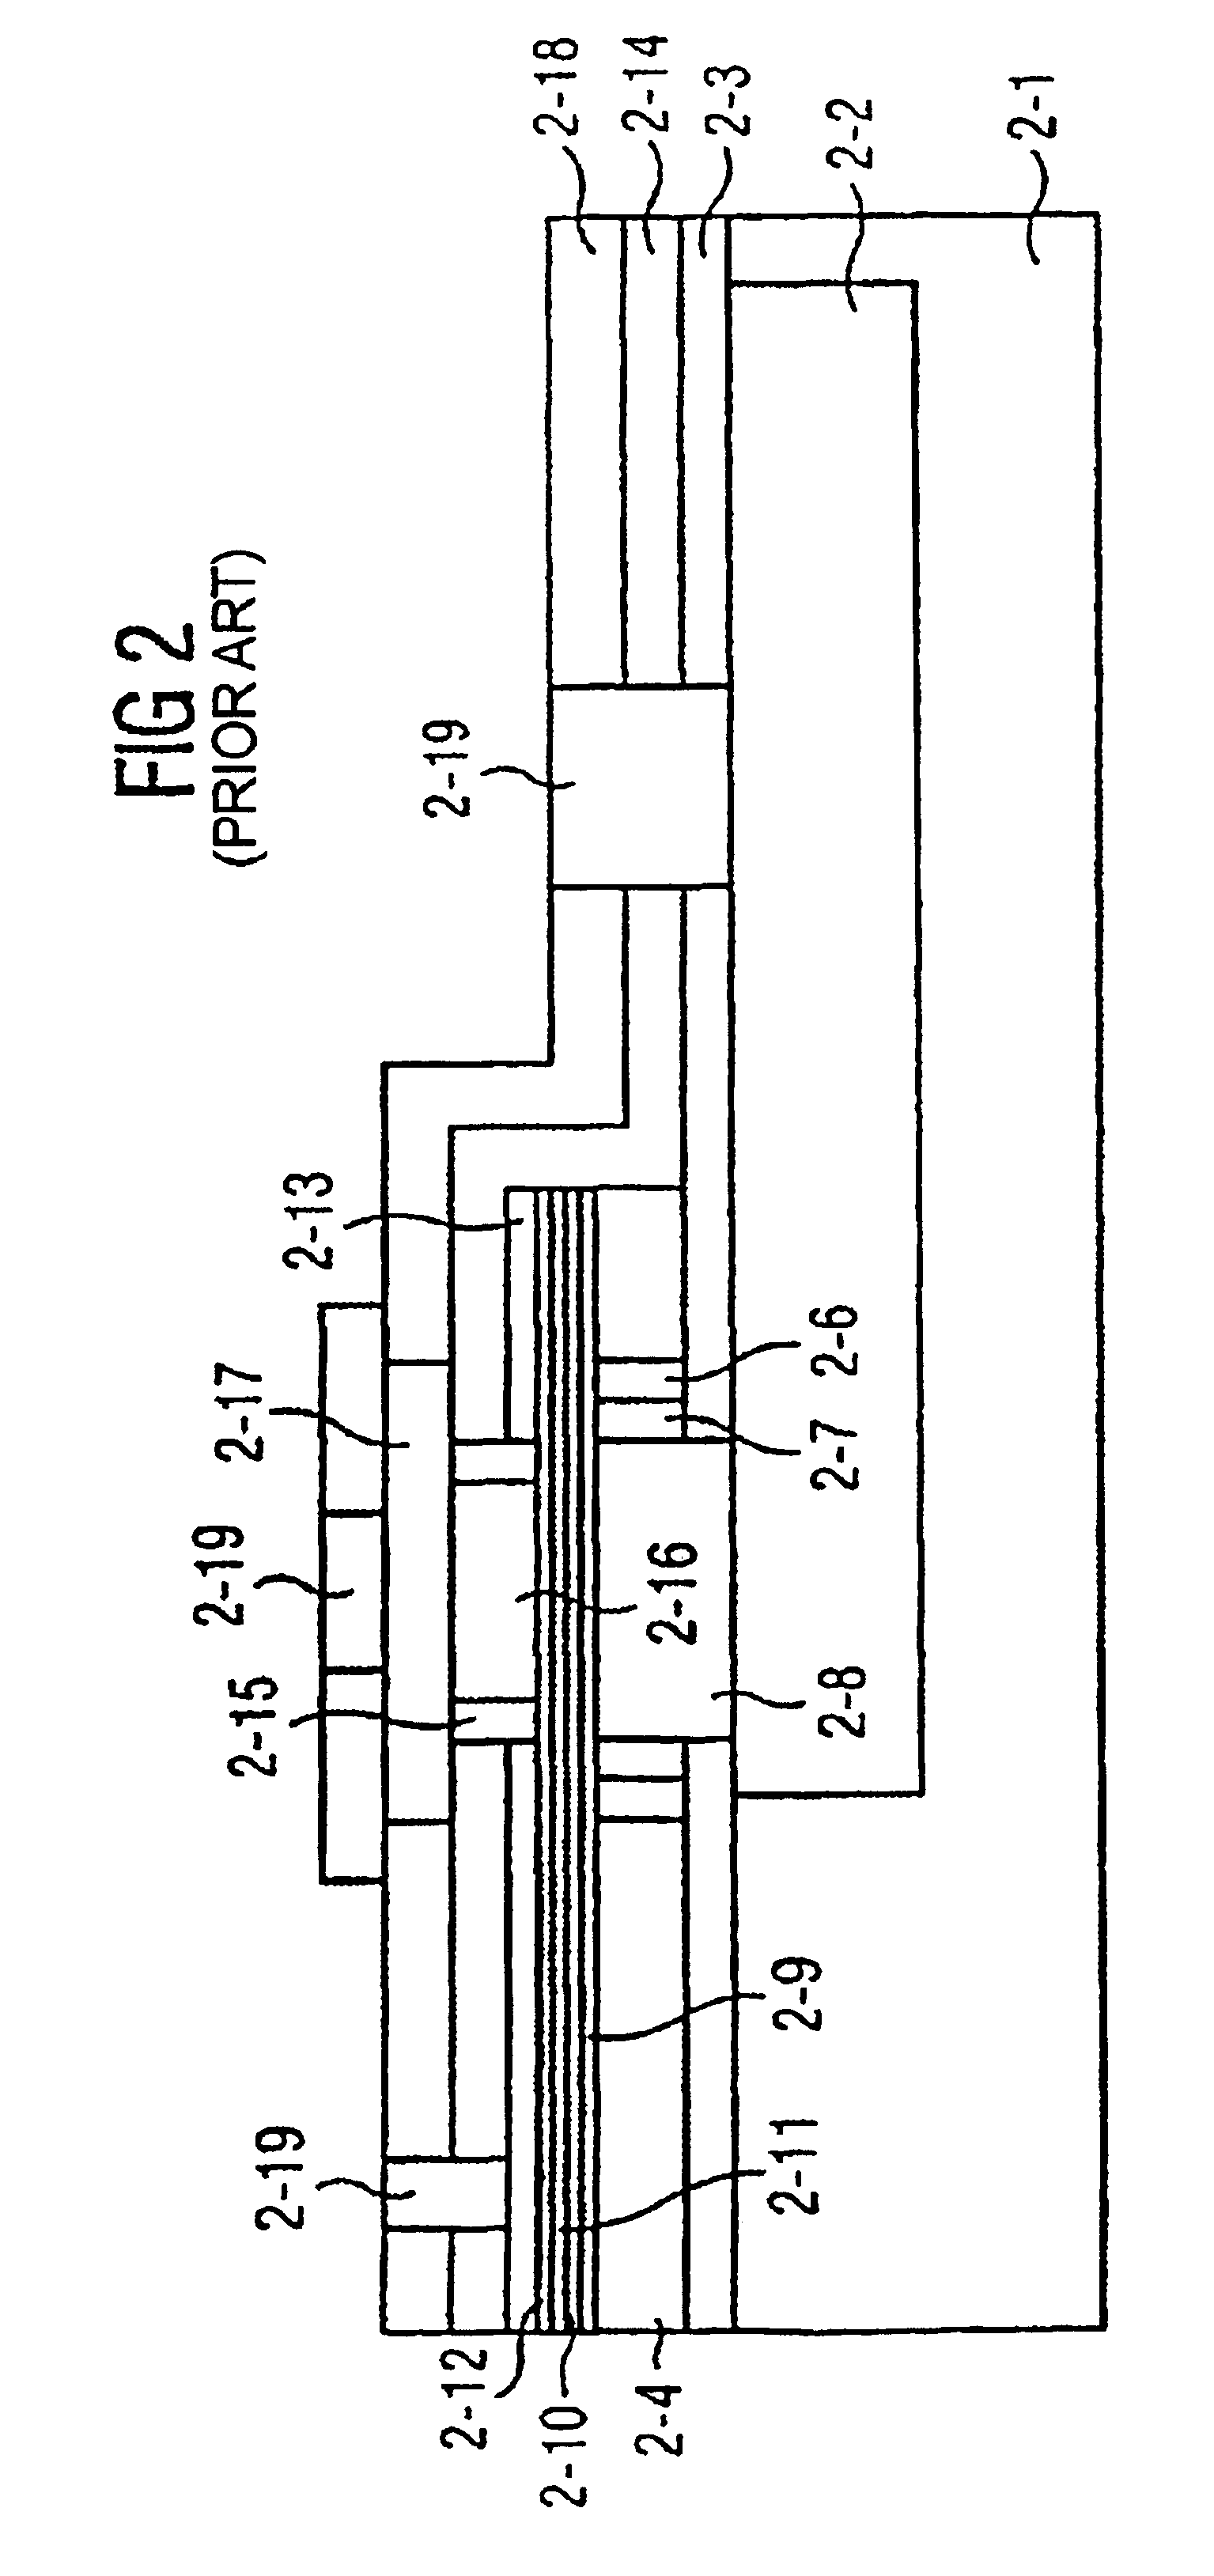 Method for fabricating a bipolar transistor